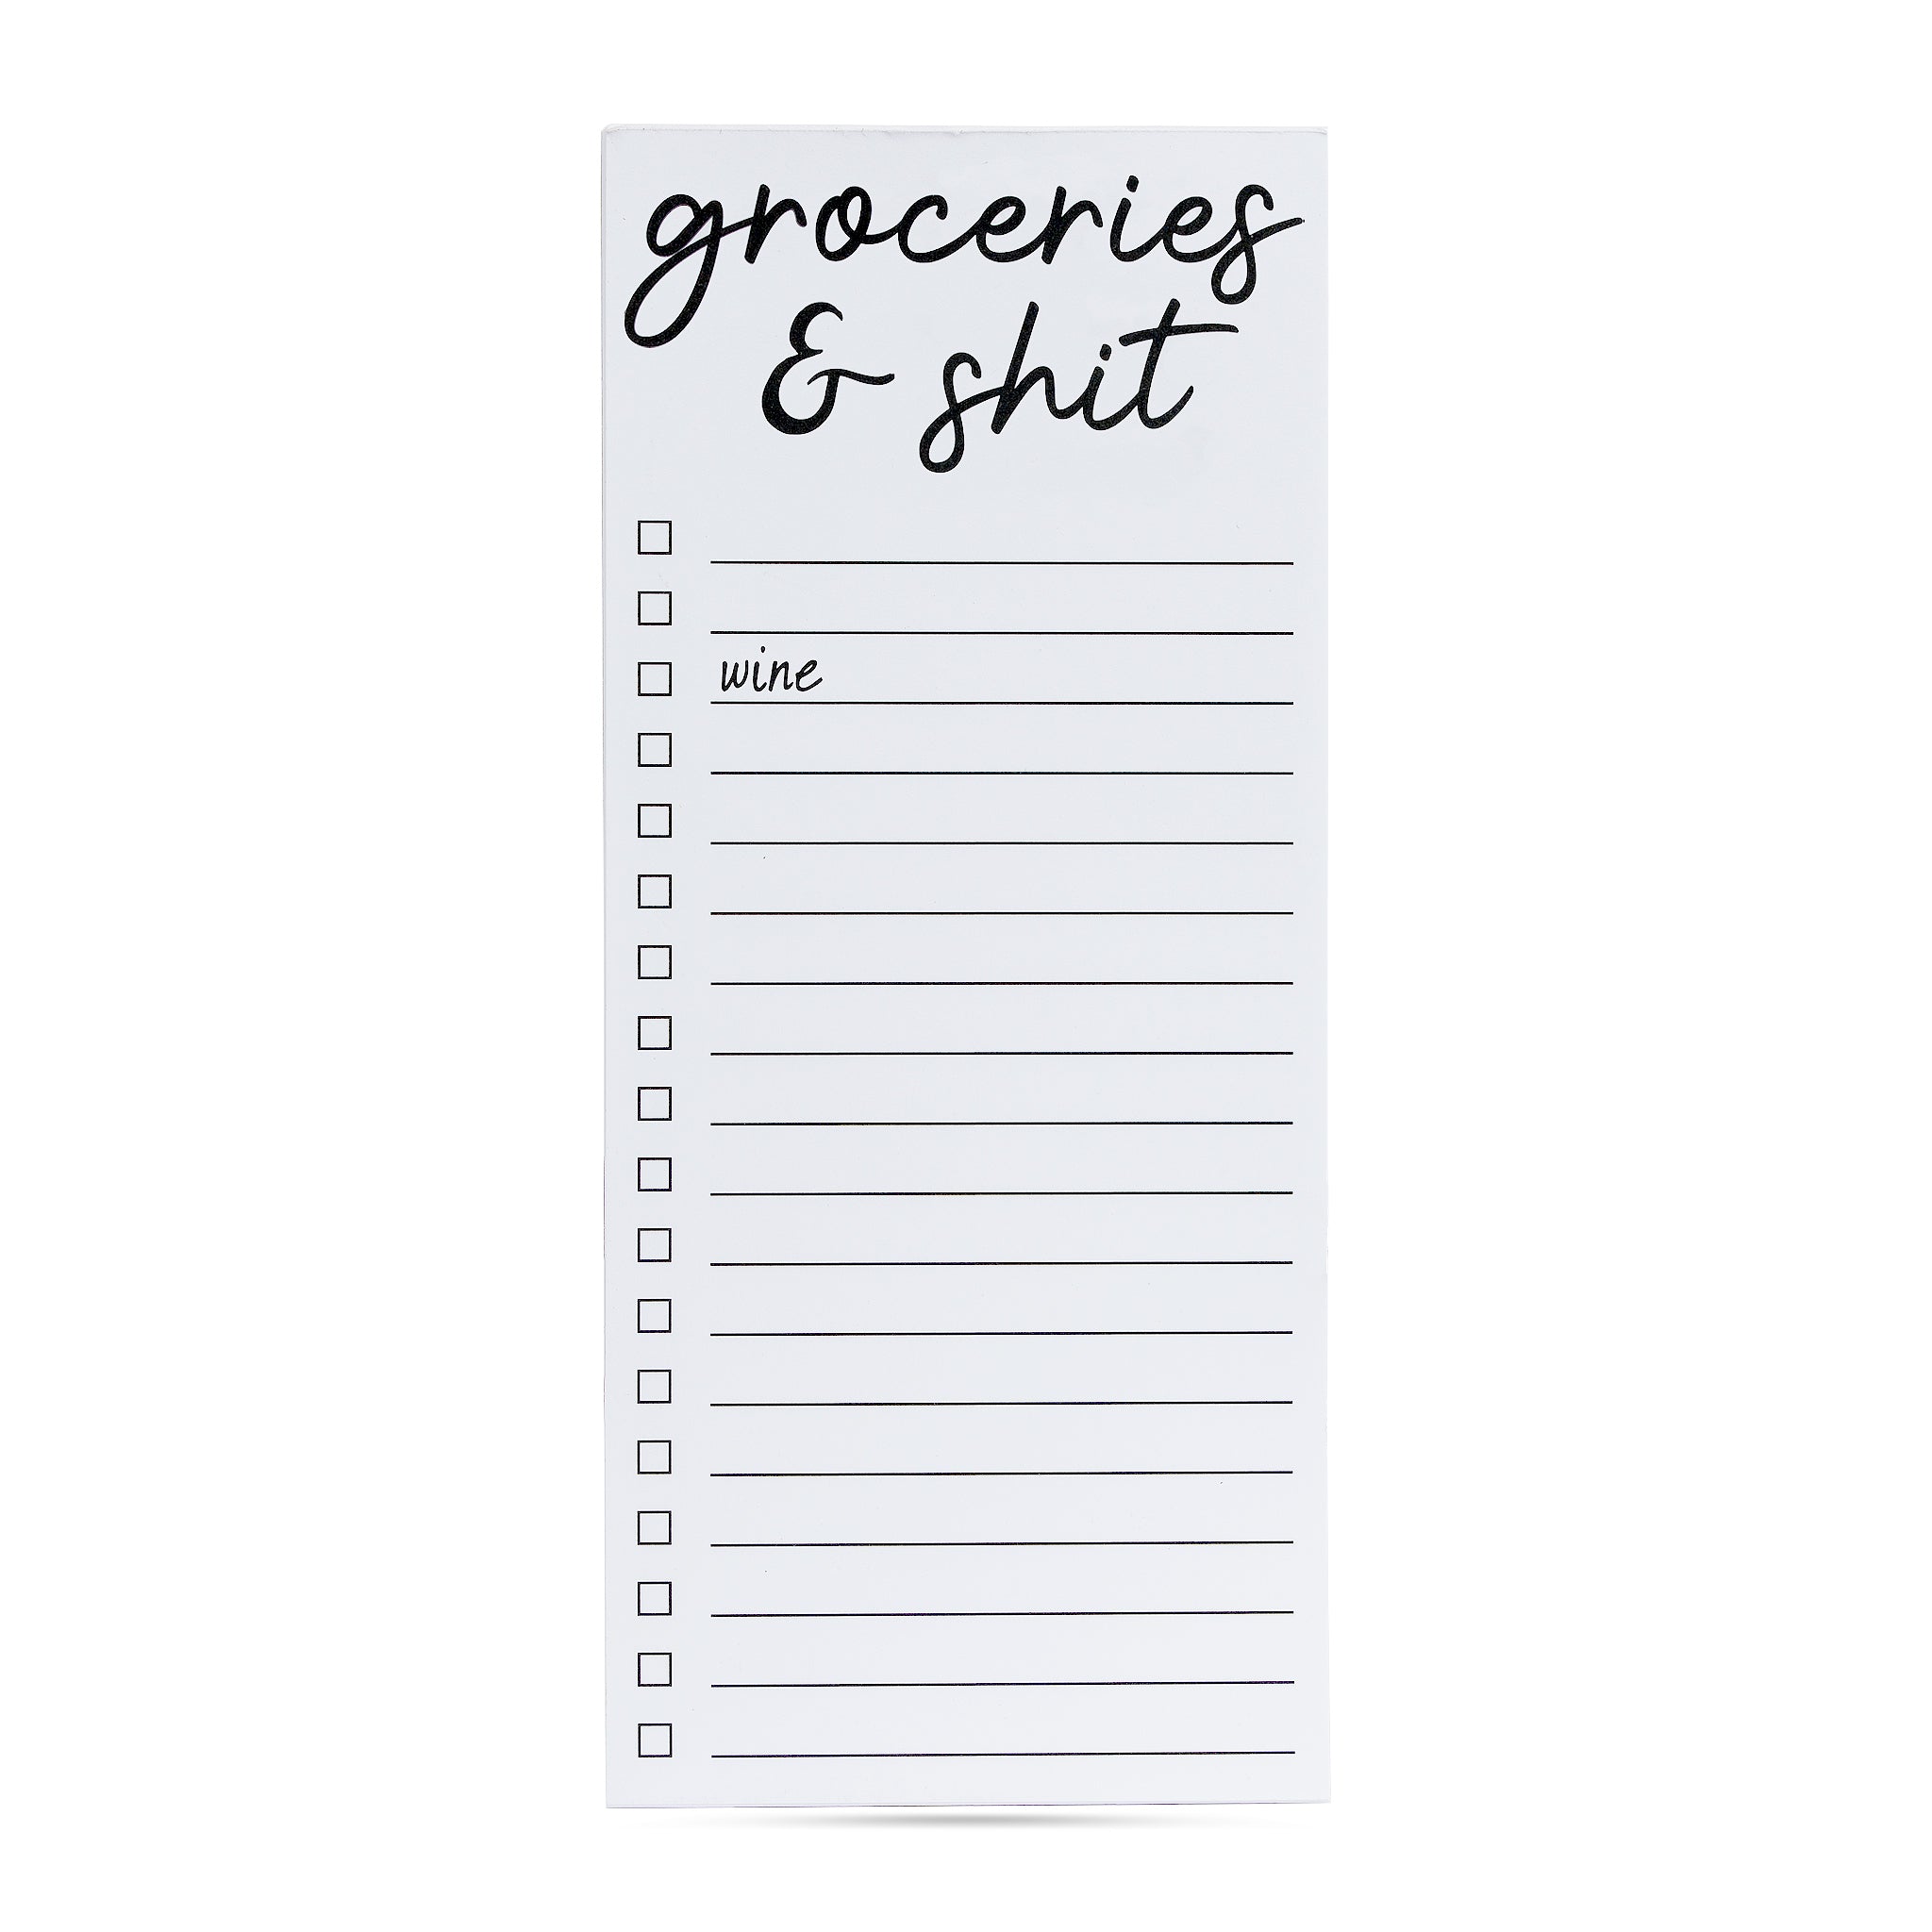 Groceries & shit wine list pad